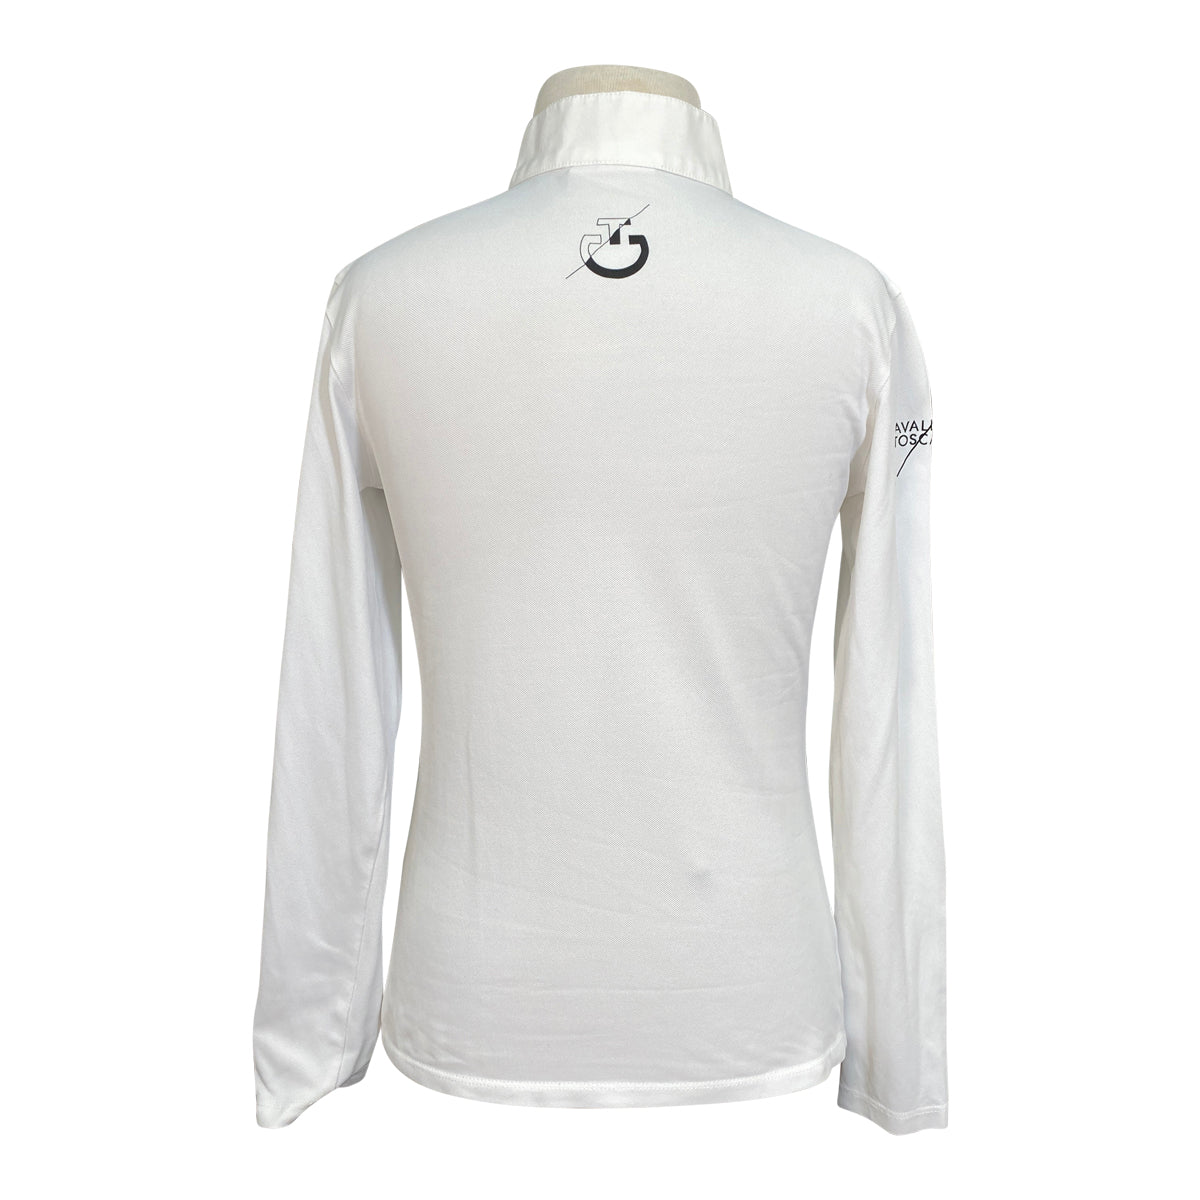 Cavalleria Toscana 'Team' Show Shirt in White